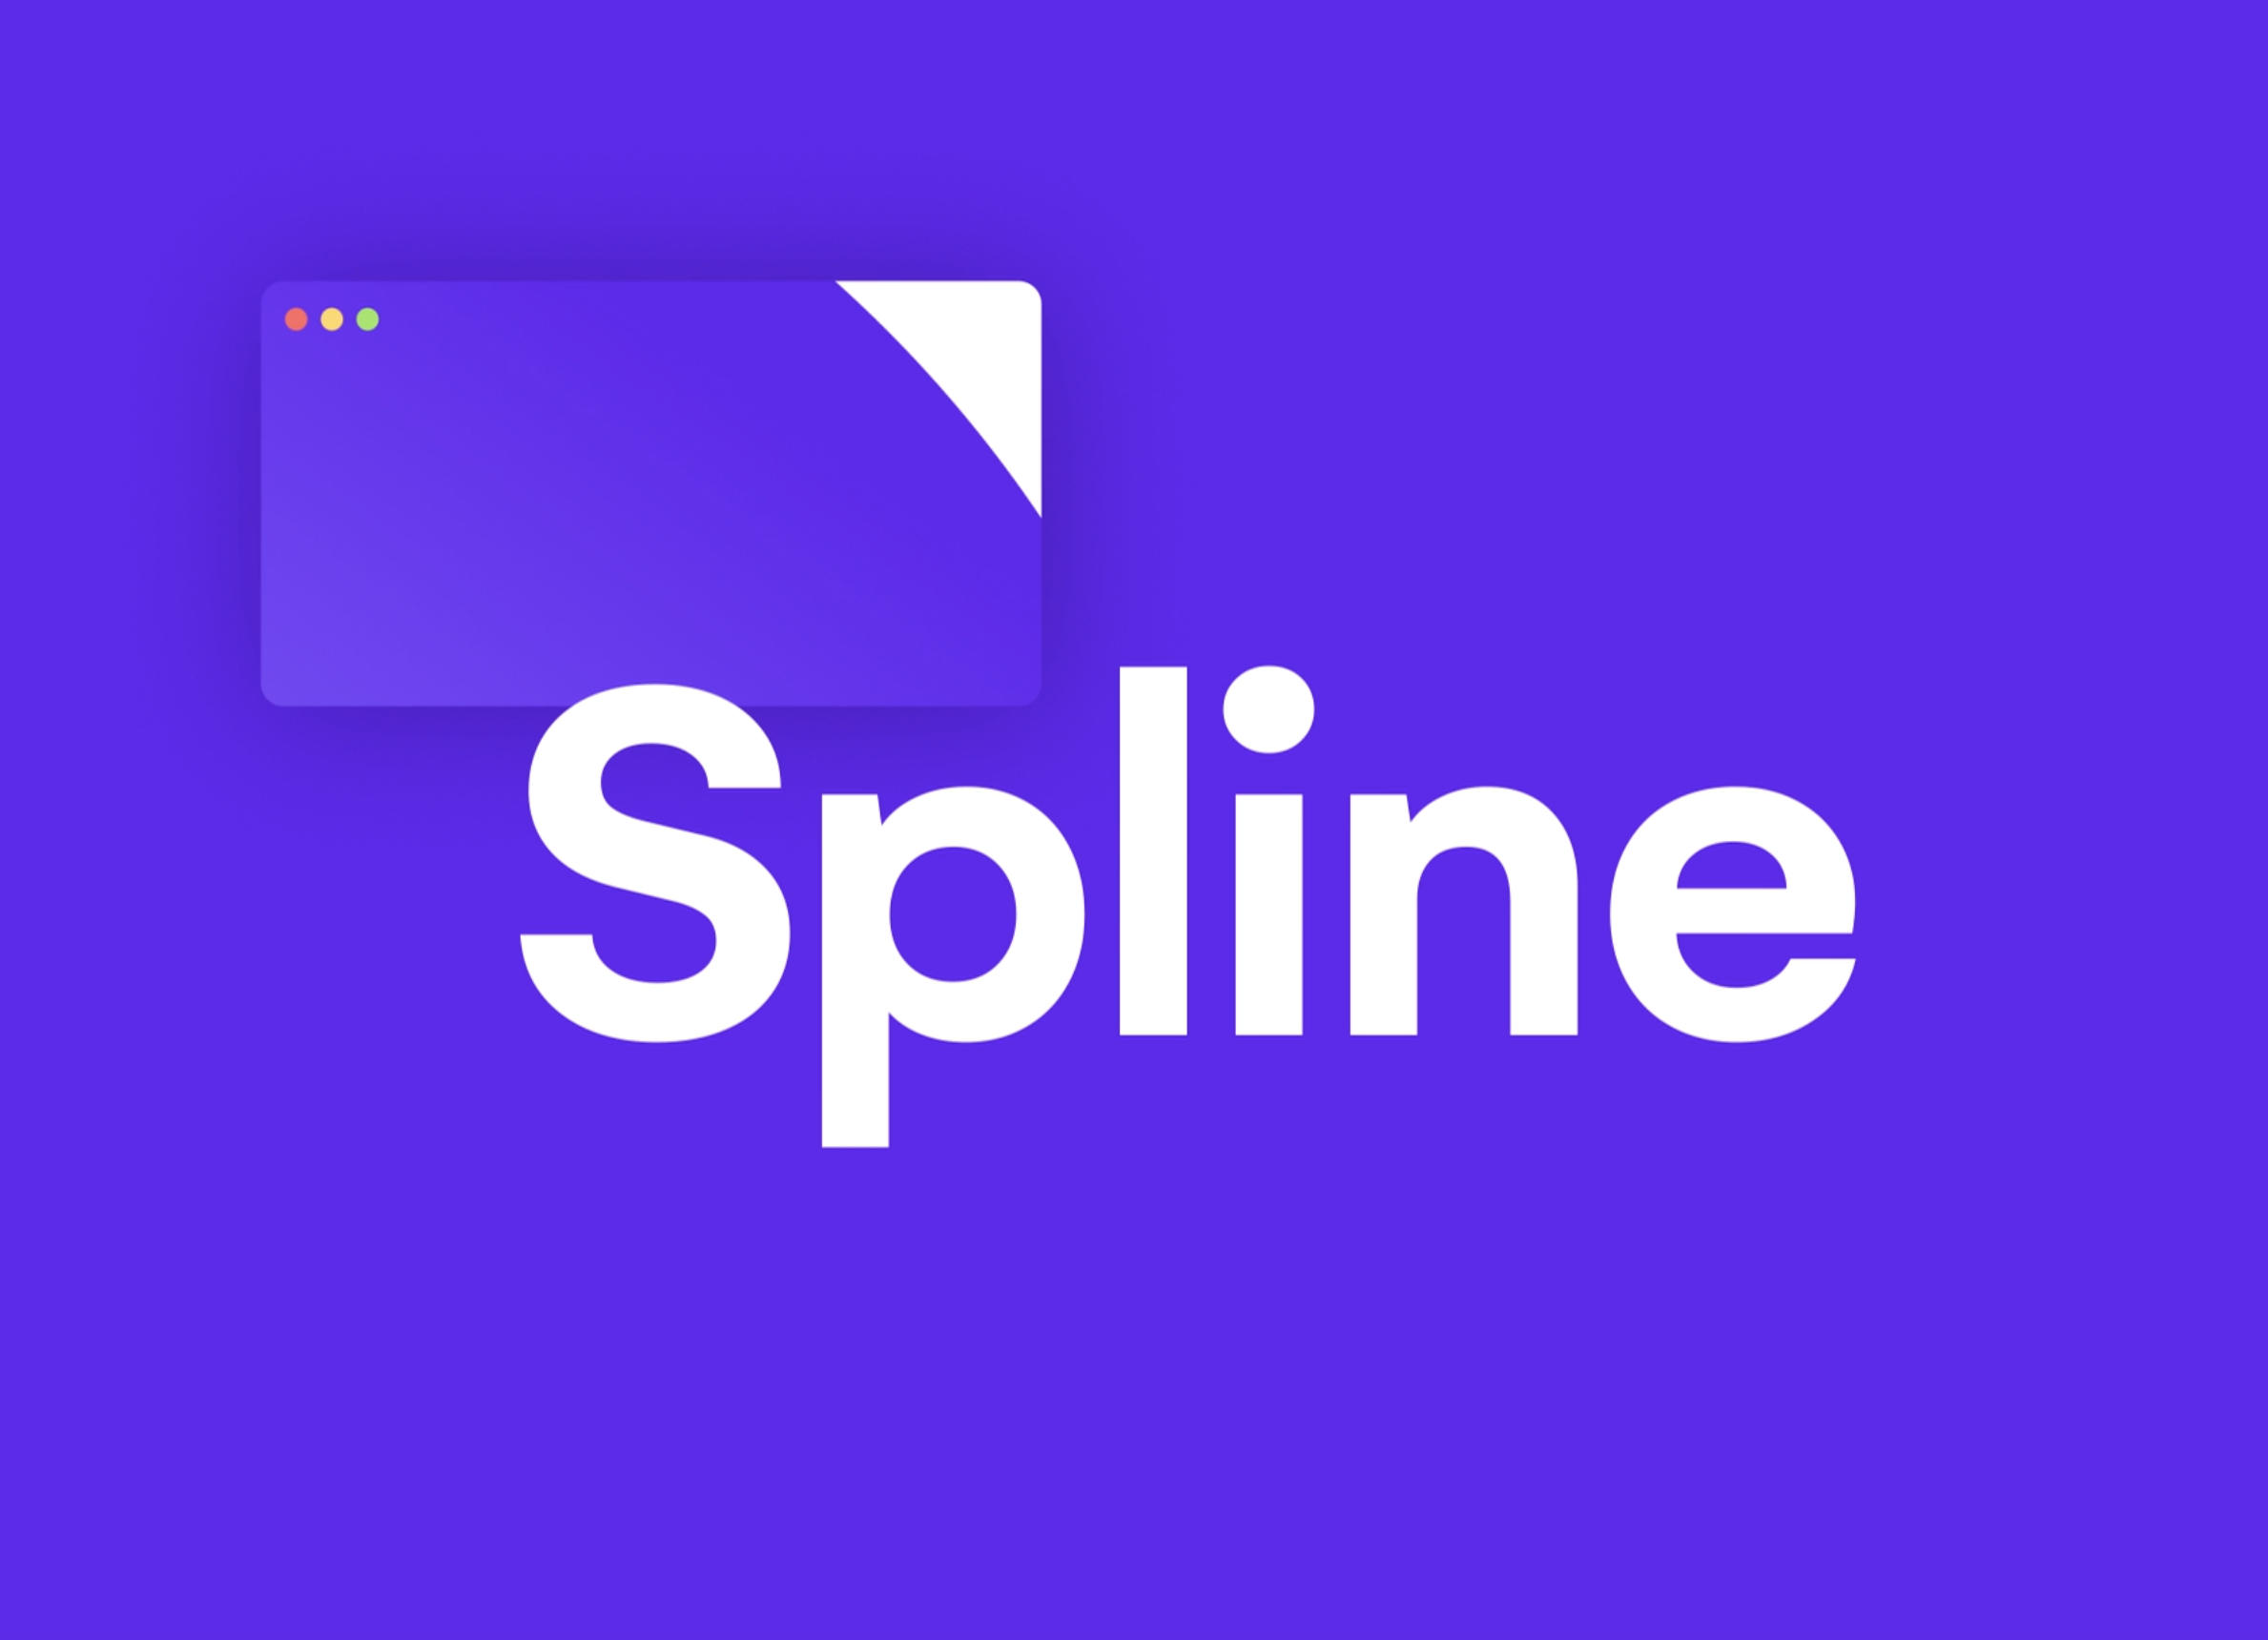 Spline